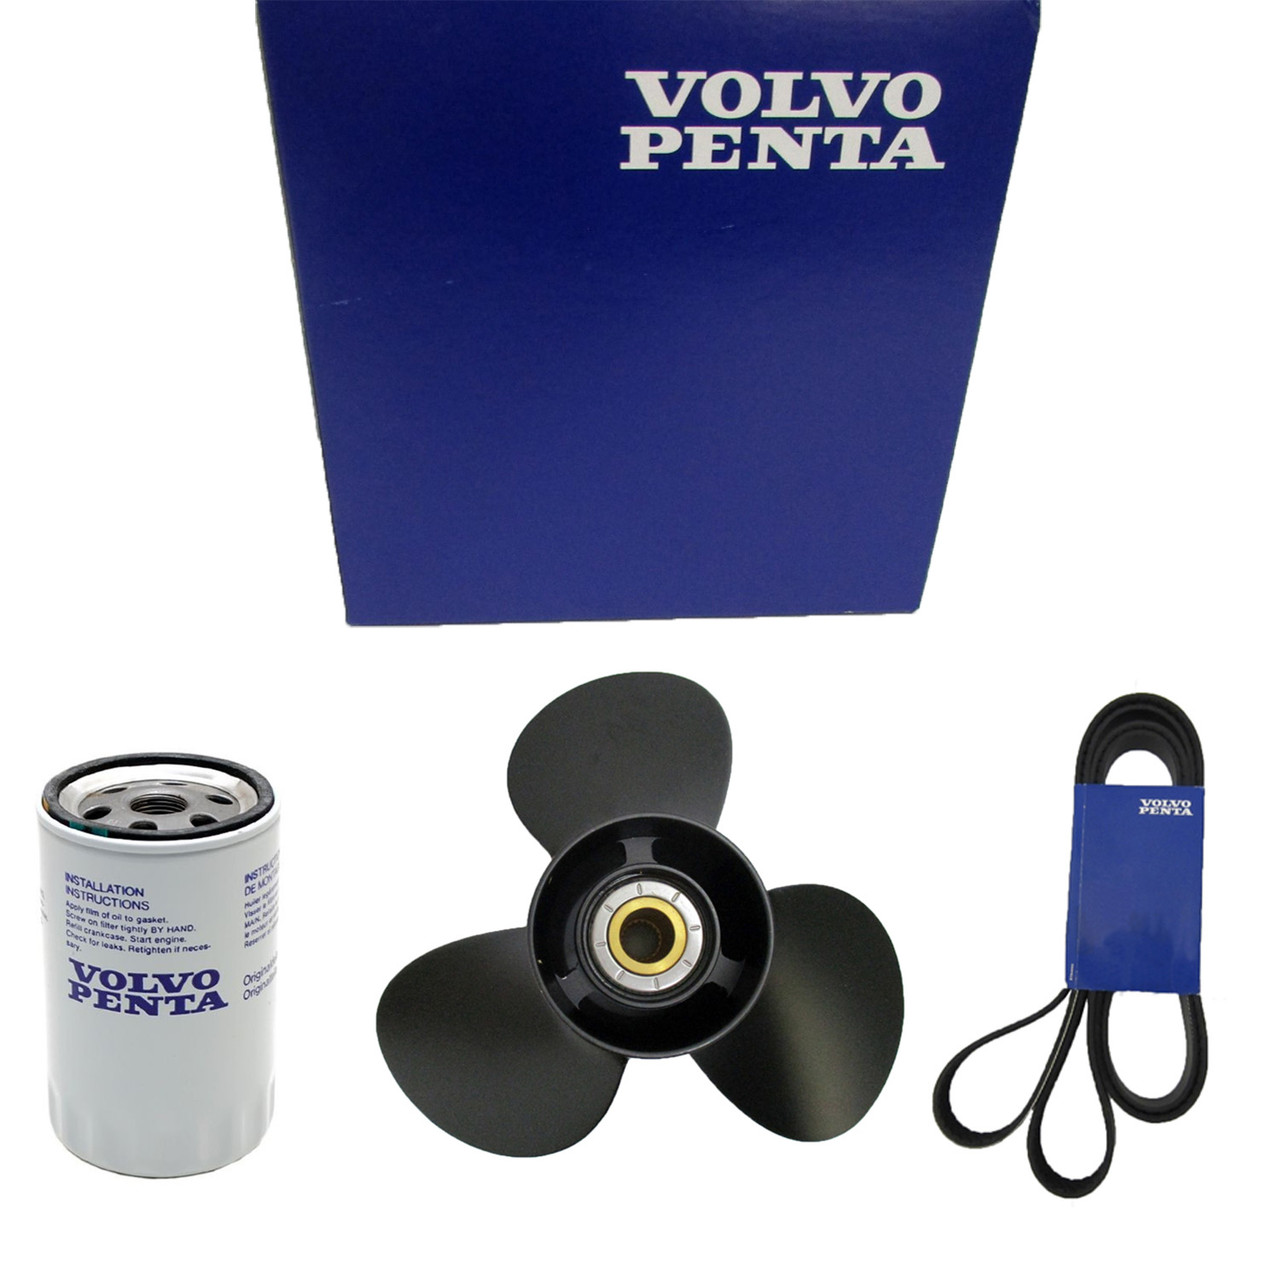 Volvo Penta New OEM Filter Cap, 24472550